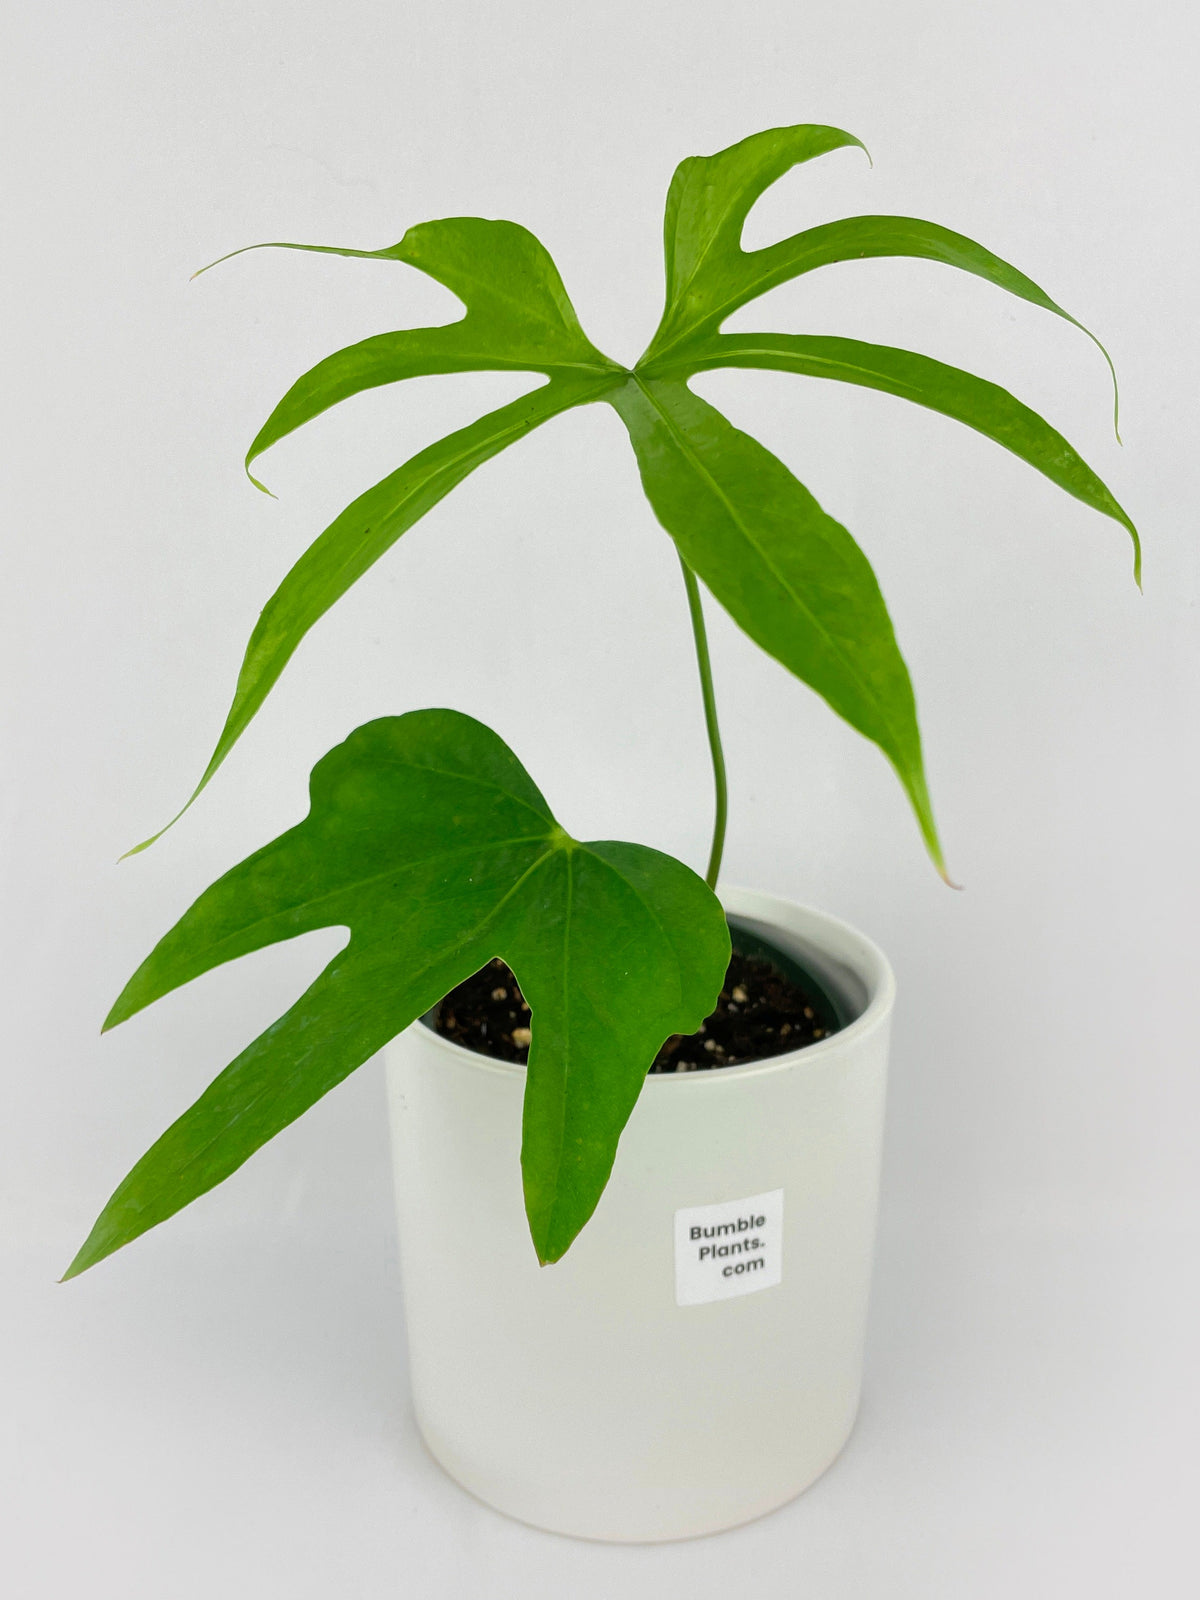 Anthurium Pedatoradiatum by Bumble Plants